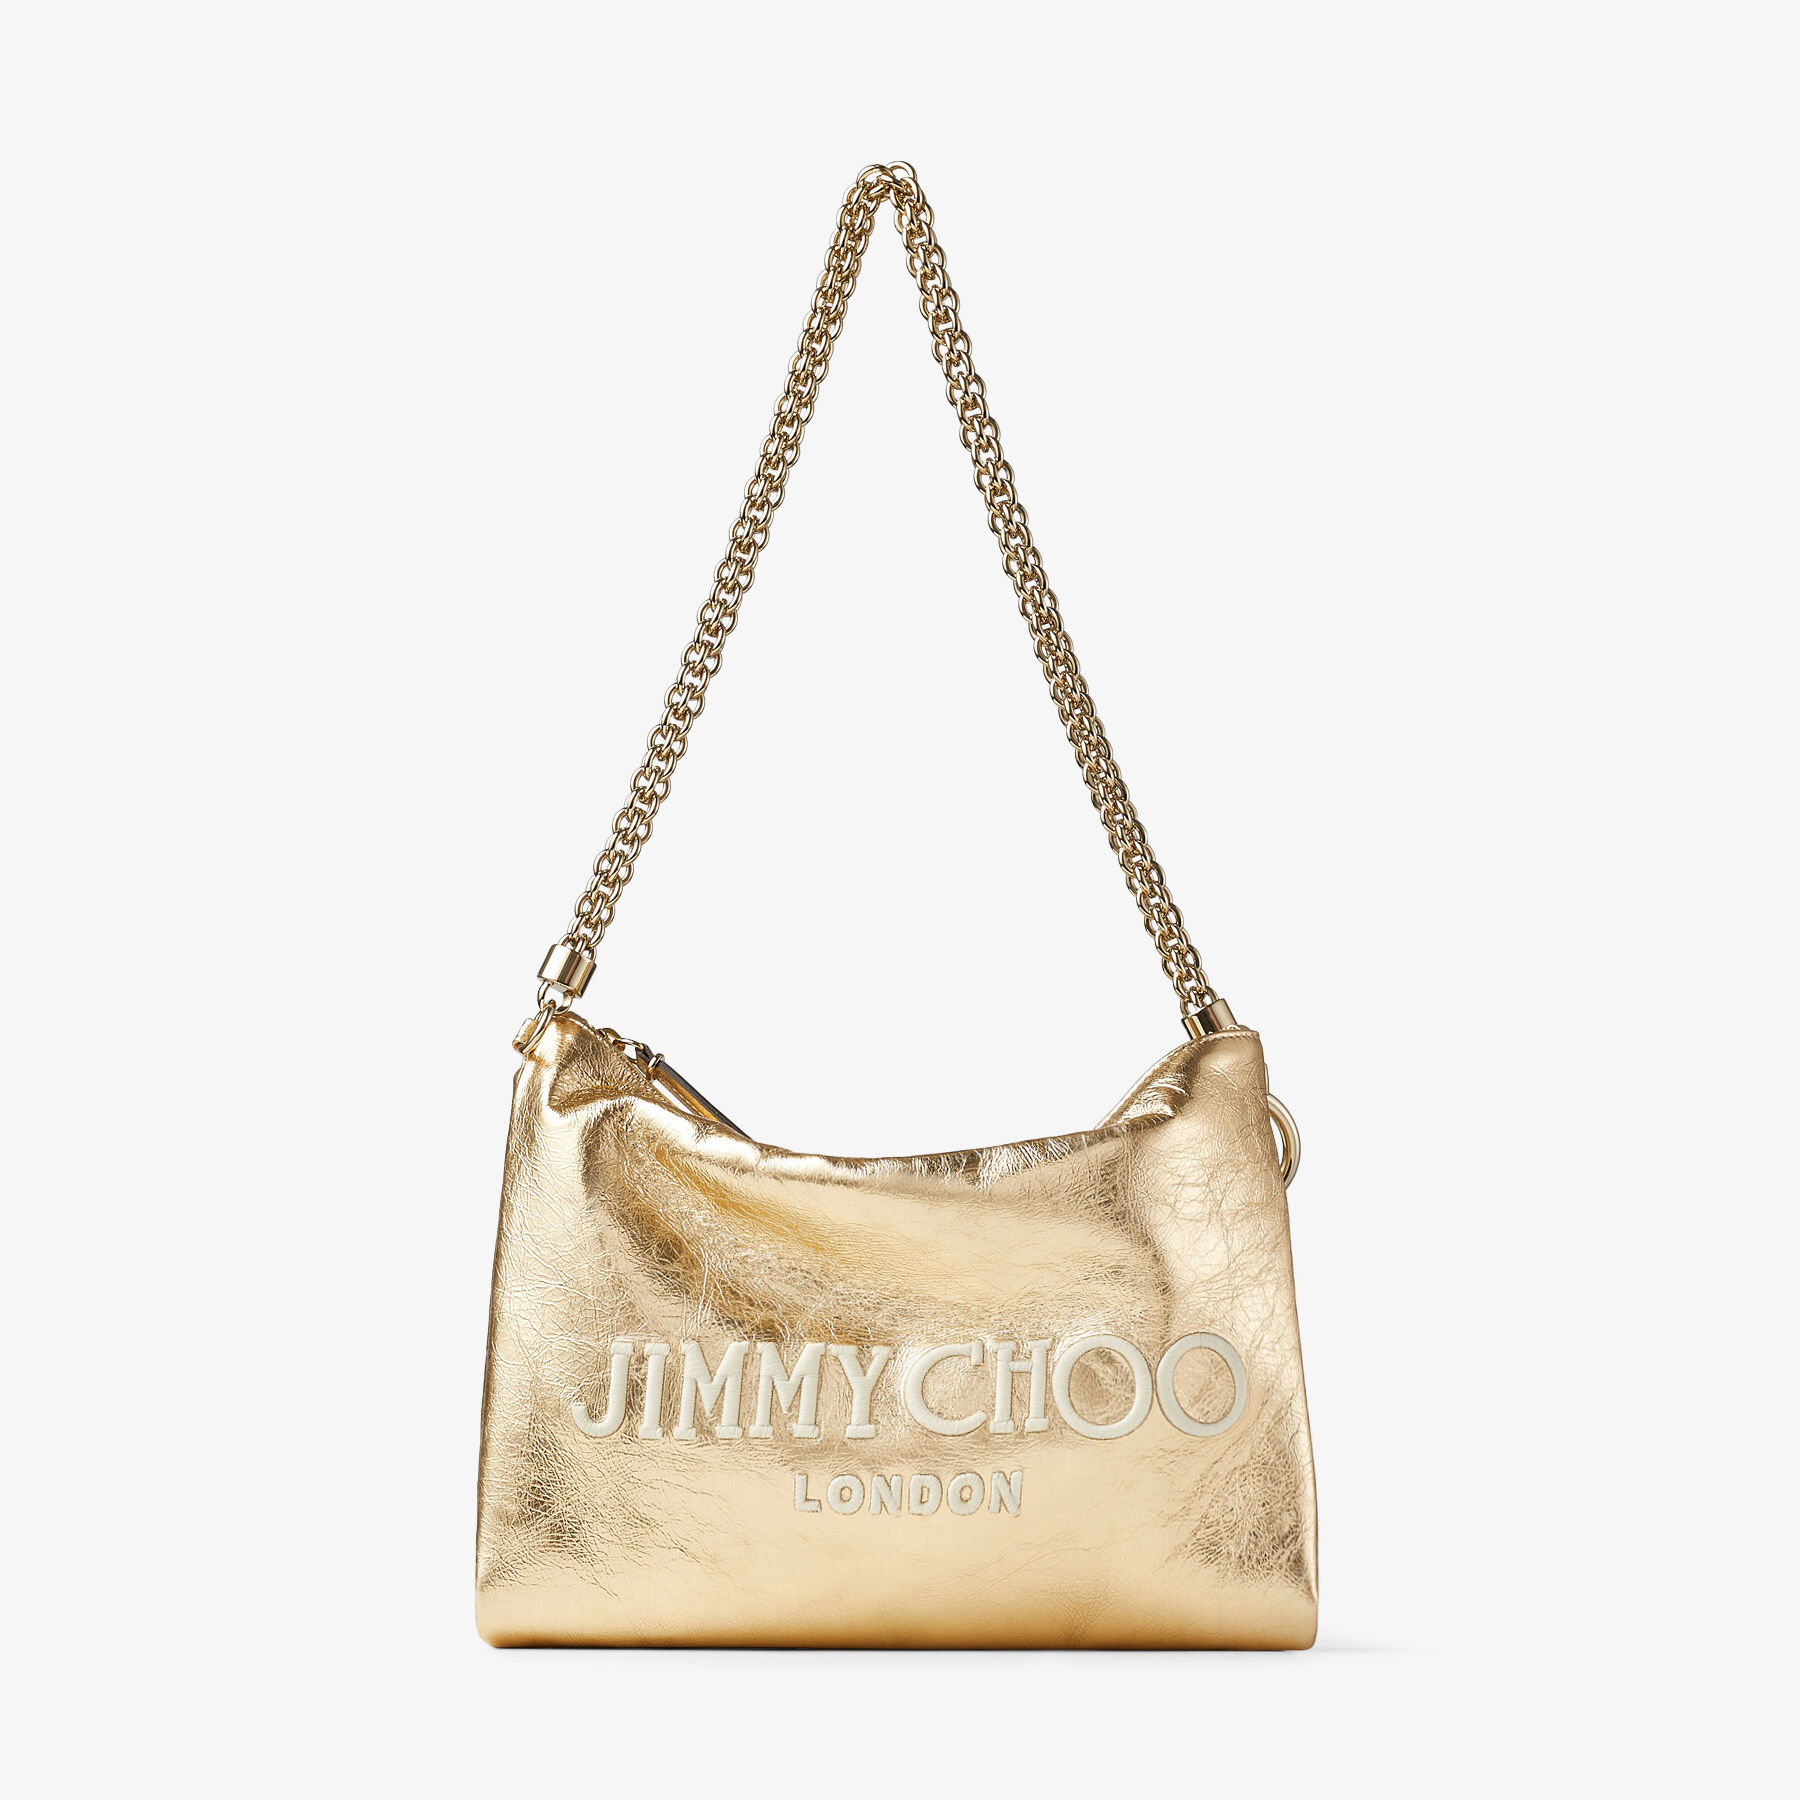 CALLIE SHOULDER | ジミー チュウ刺繍入り Gold メタリック